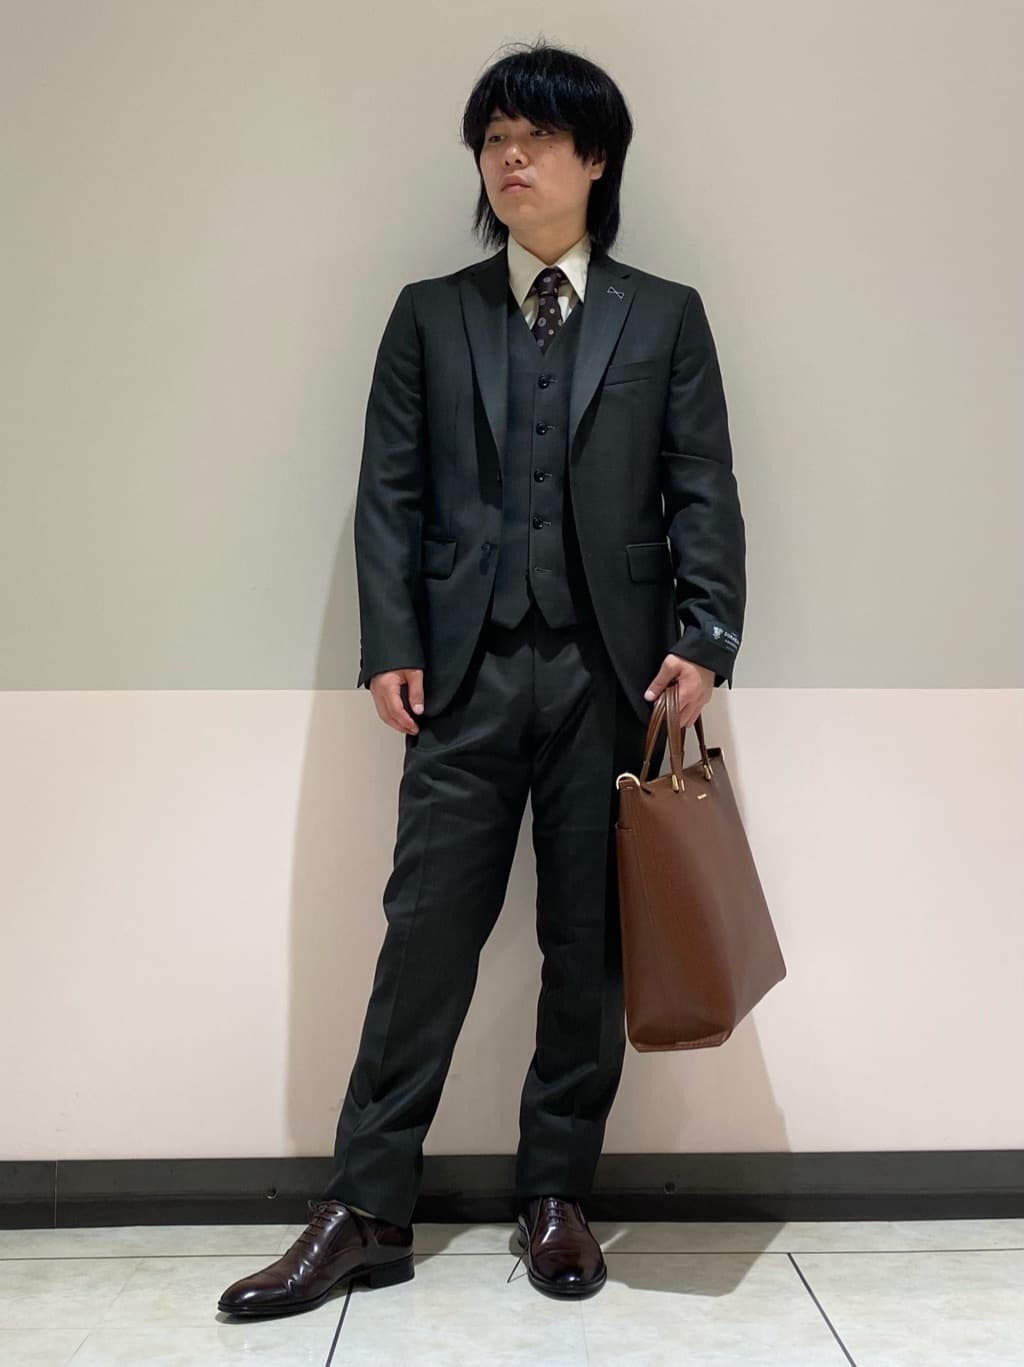 TAKEO KIKUCHIの【DORMEUIL】カラーグレンチェック スーツを使った